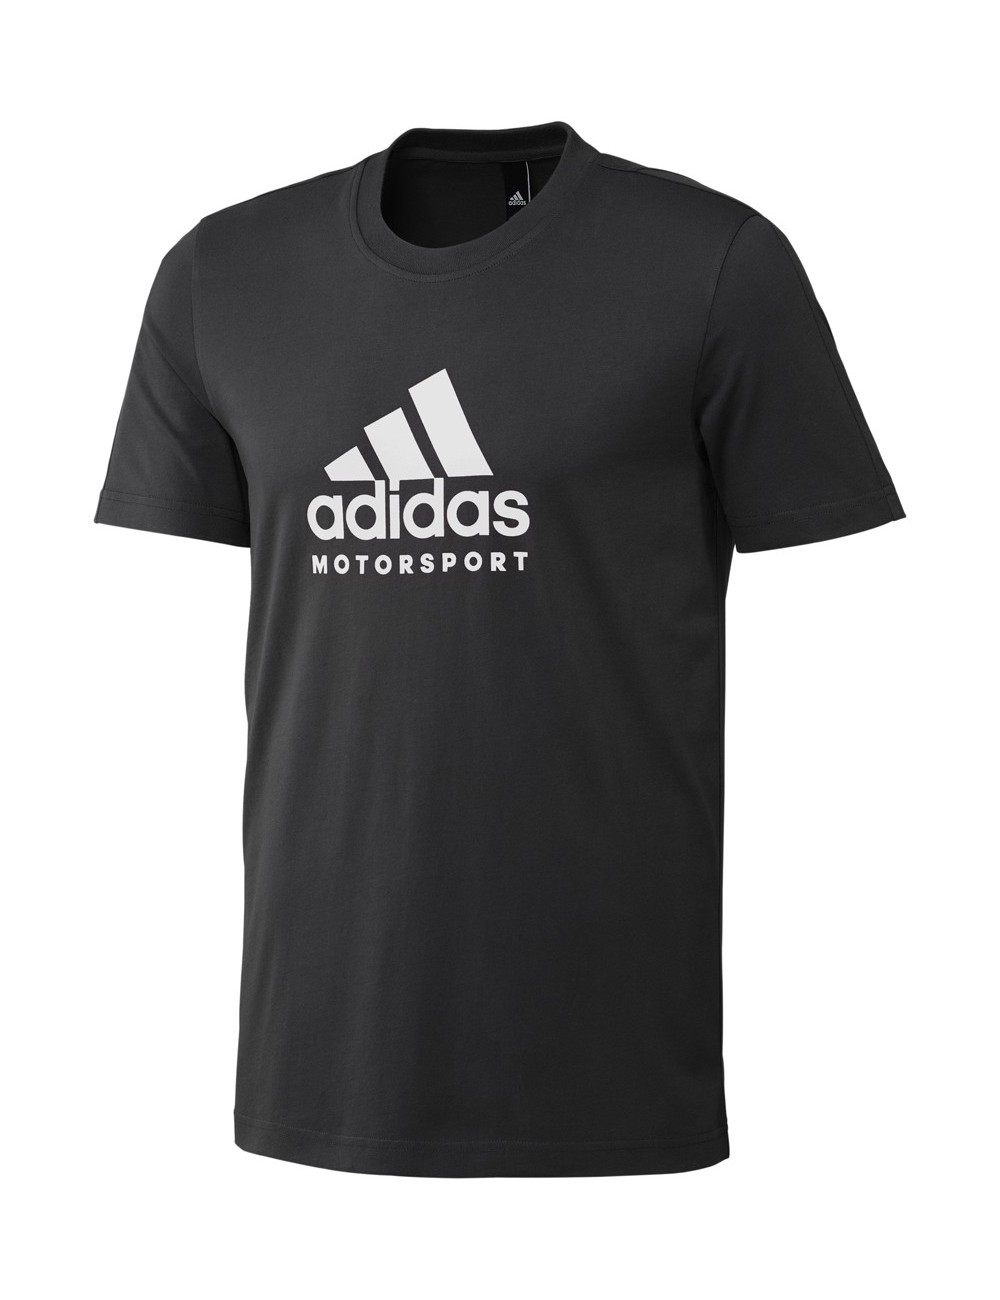 T-shirt Adidas Motorsport branco / preto